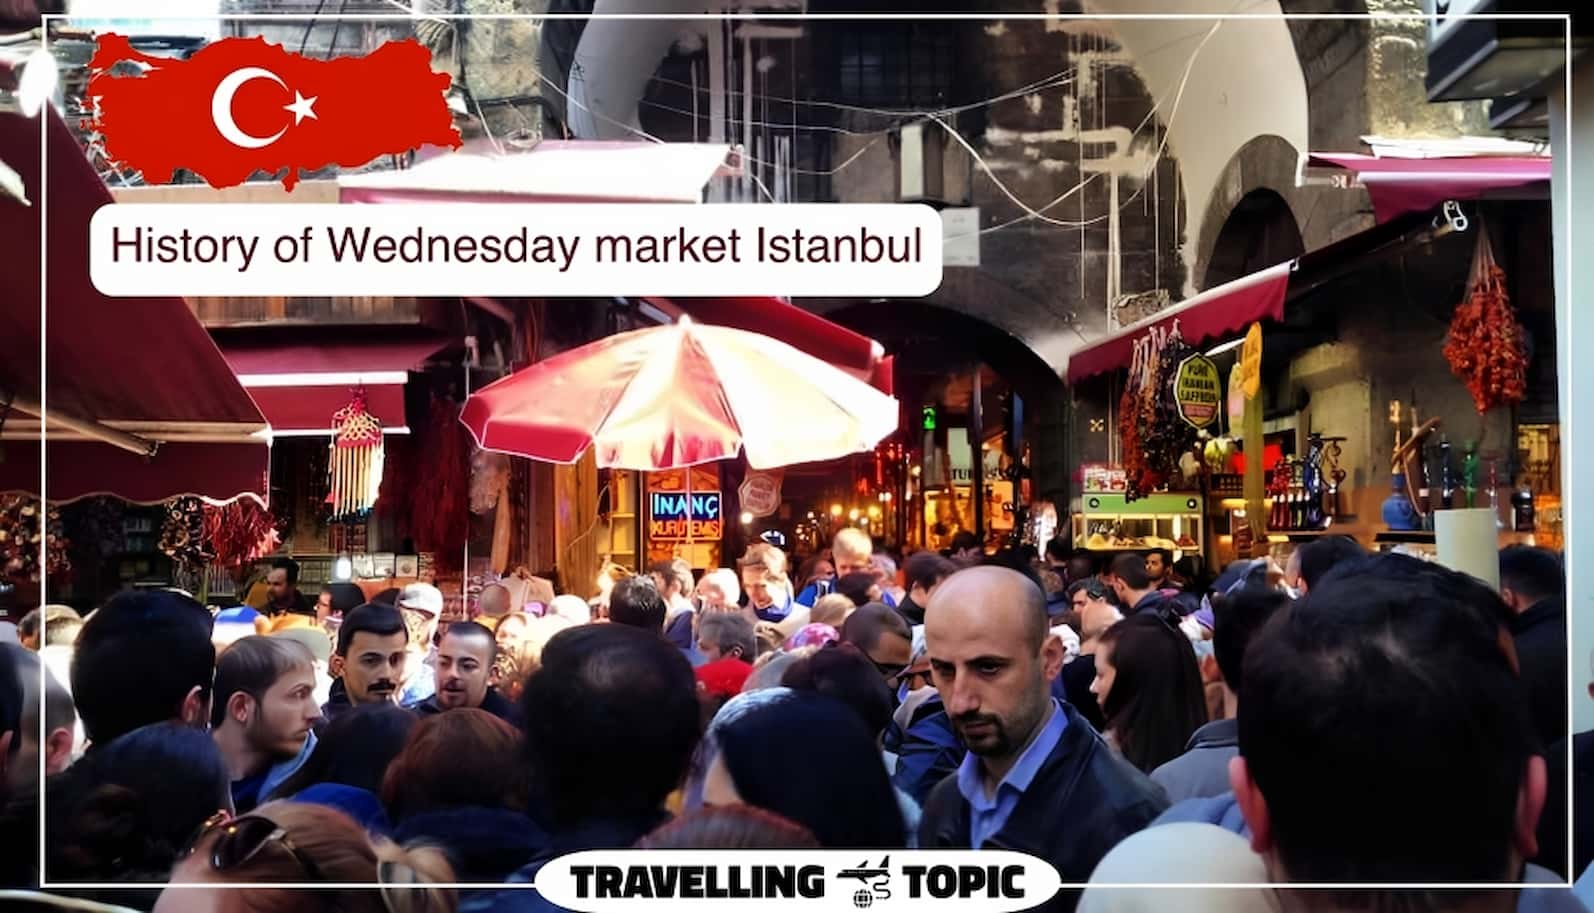 History of Wednesday market Istanbul